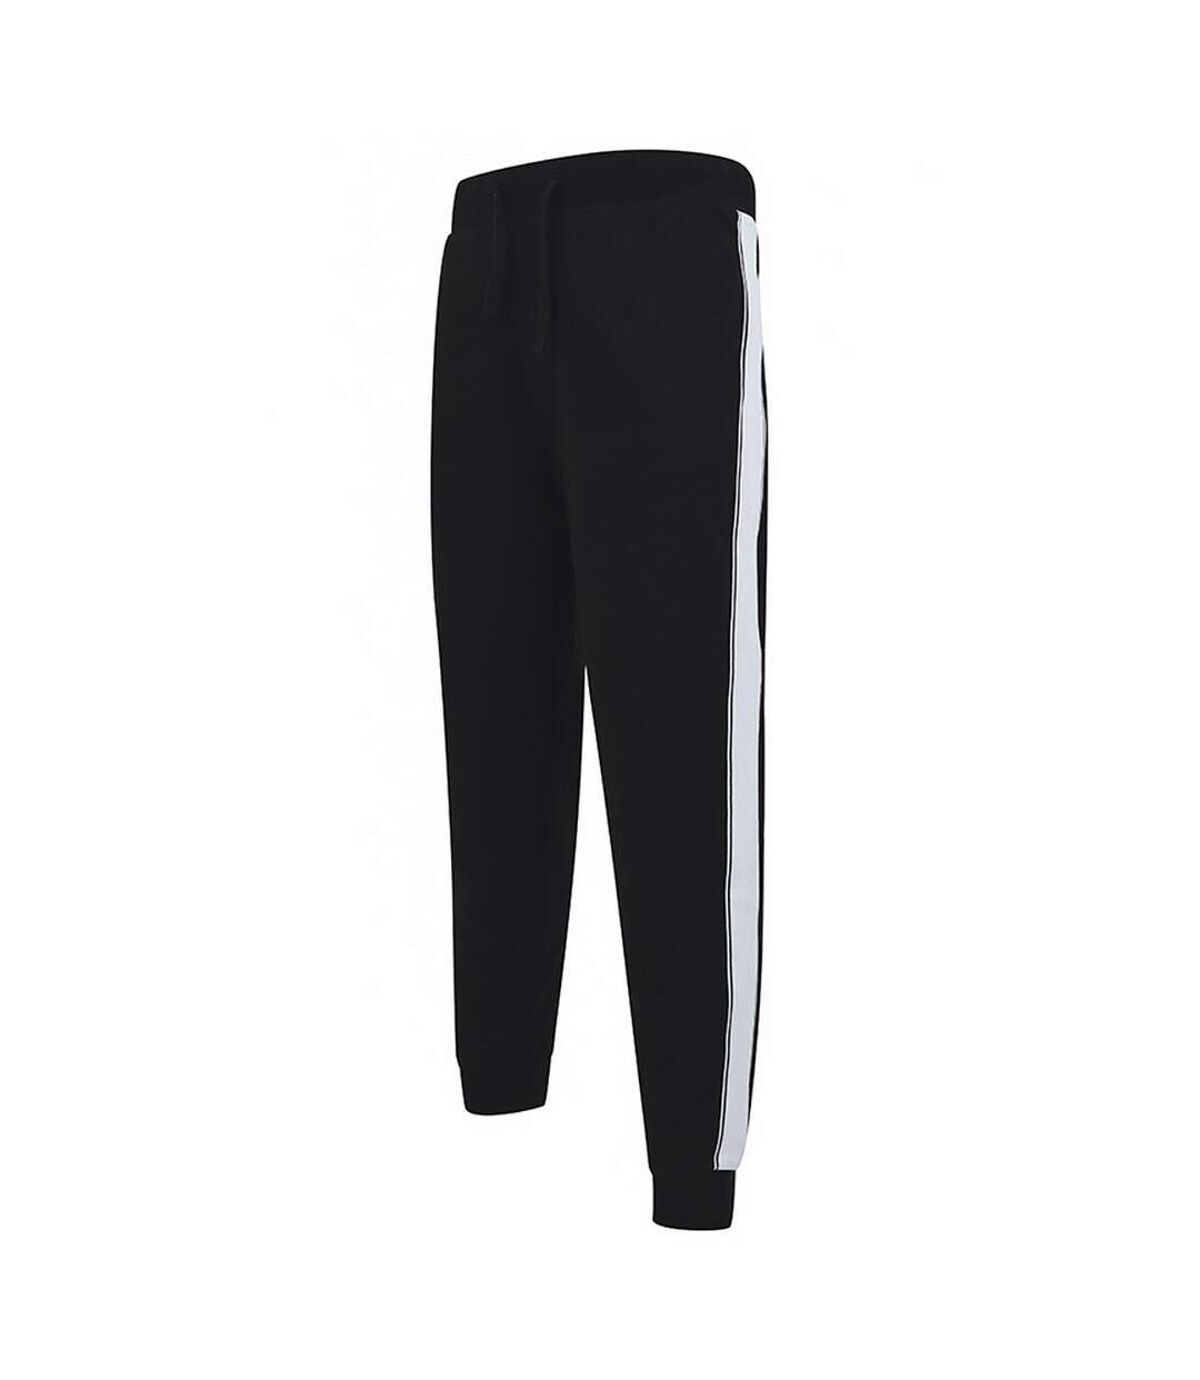 SF - Pantalon de jogging - Adulte (Noir / blanc) - UTRW7324